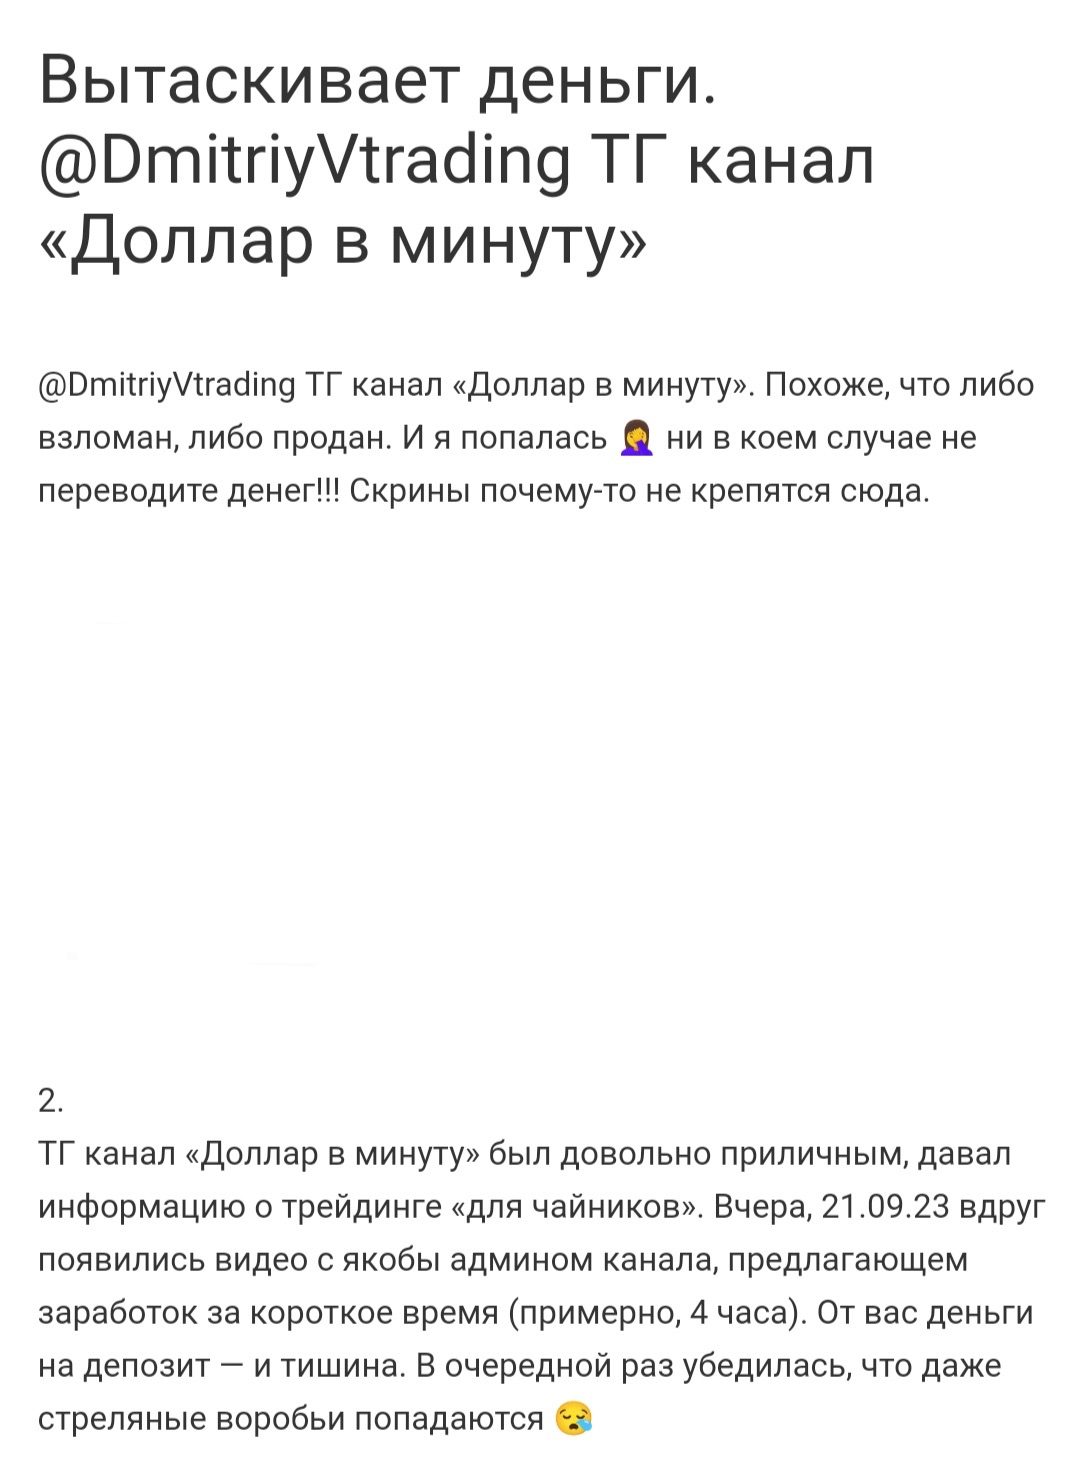 О DmitriyVtrading